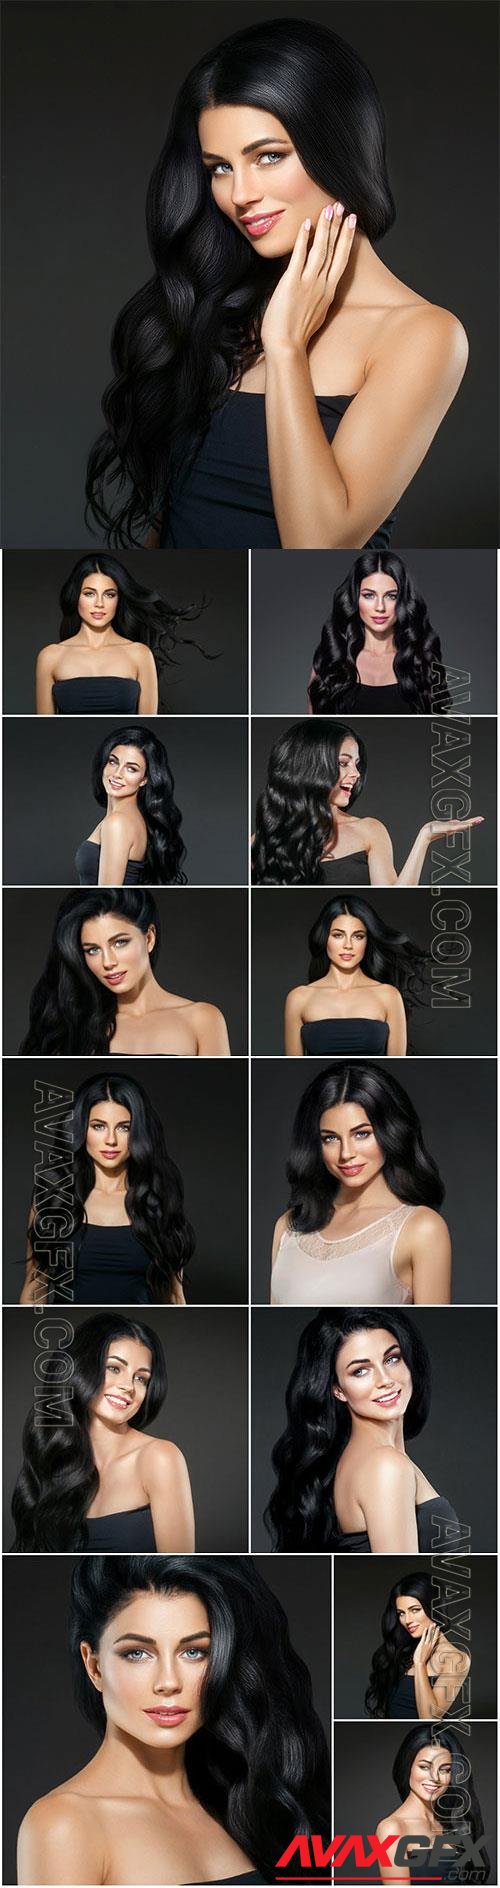 Luxury girl with black long hair stock photo